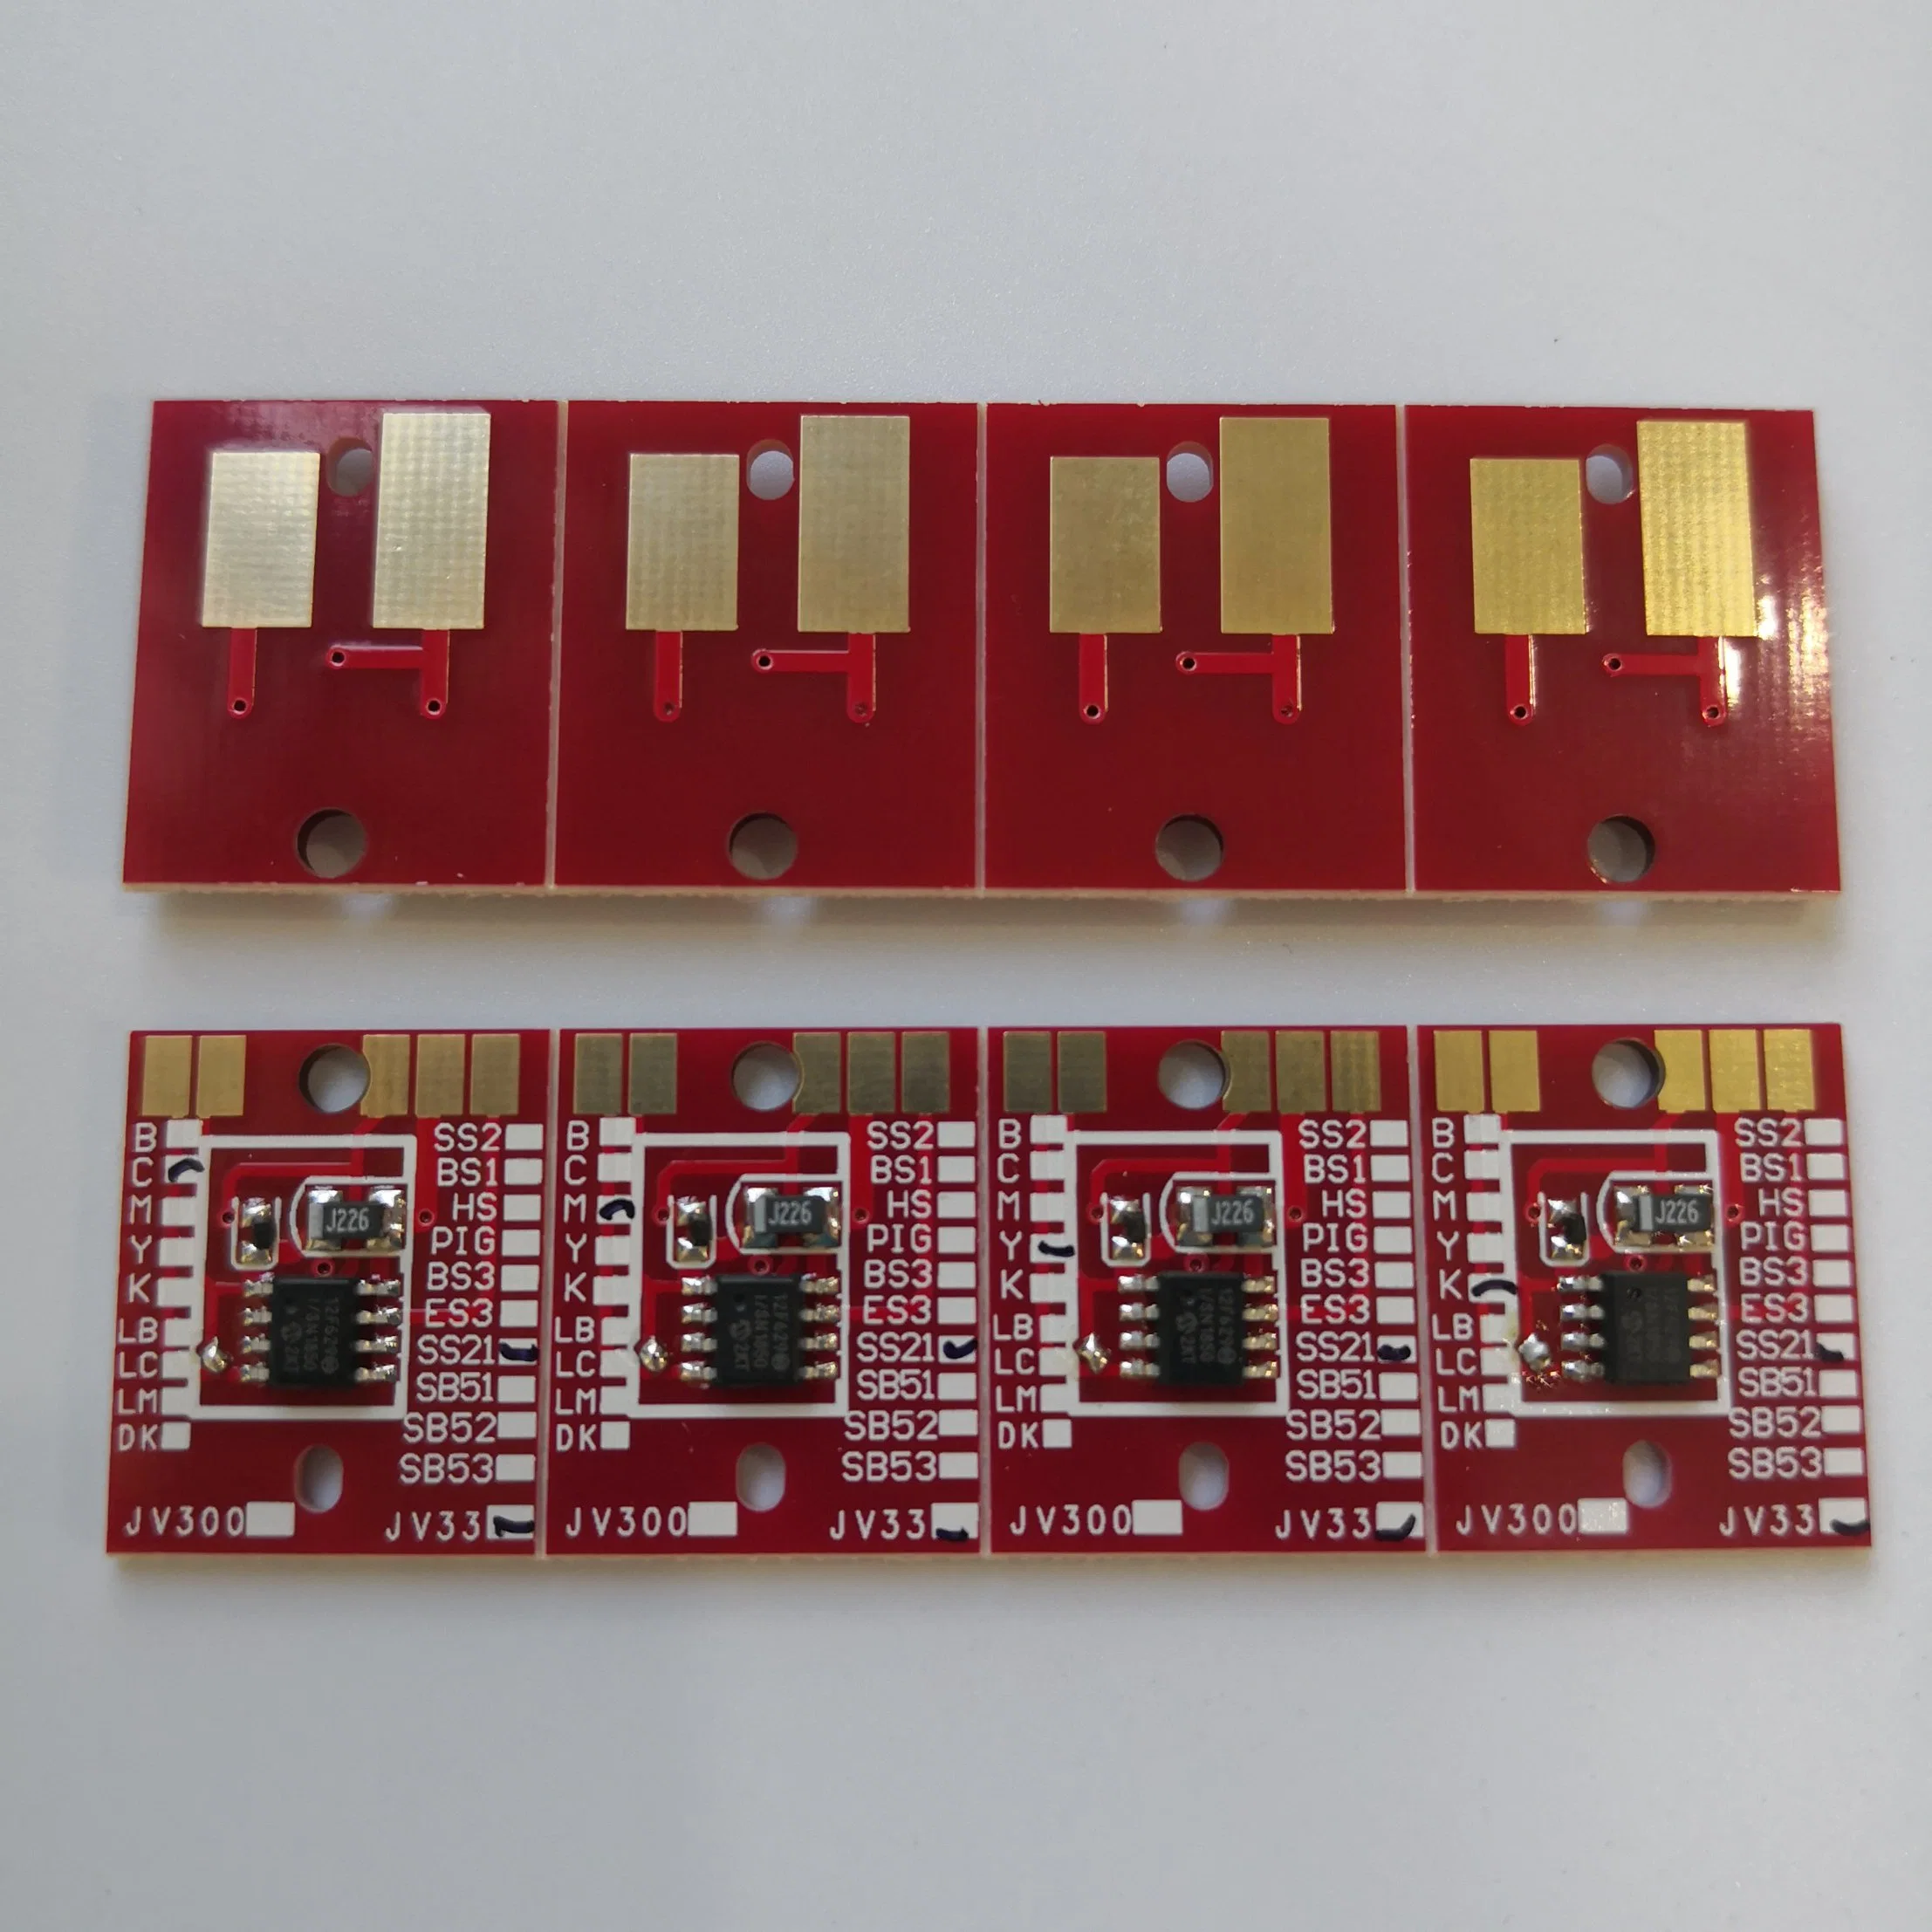 Ss21 Chip for Mimaki Jv33 Jv34 Jv5 Cjv150 Cjv30 Jv150 Jv300 Eco Solvent Plotter Printer Permanent Chip Ink Cartridge Chips